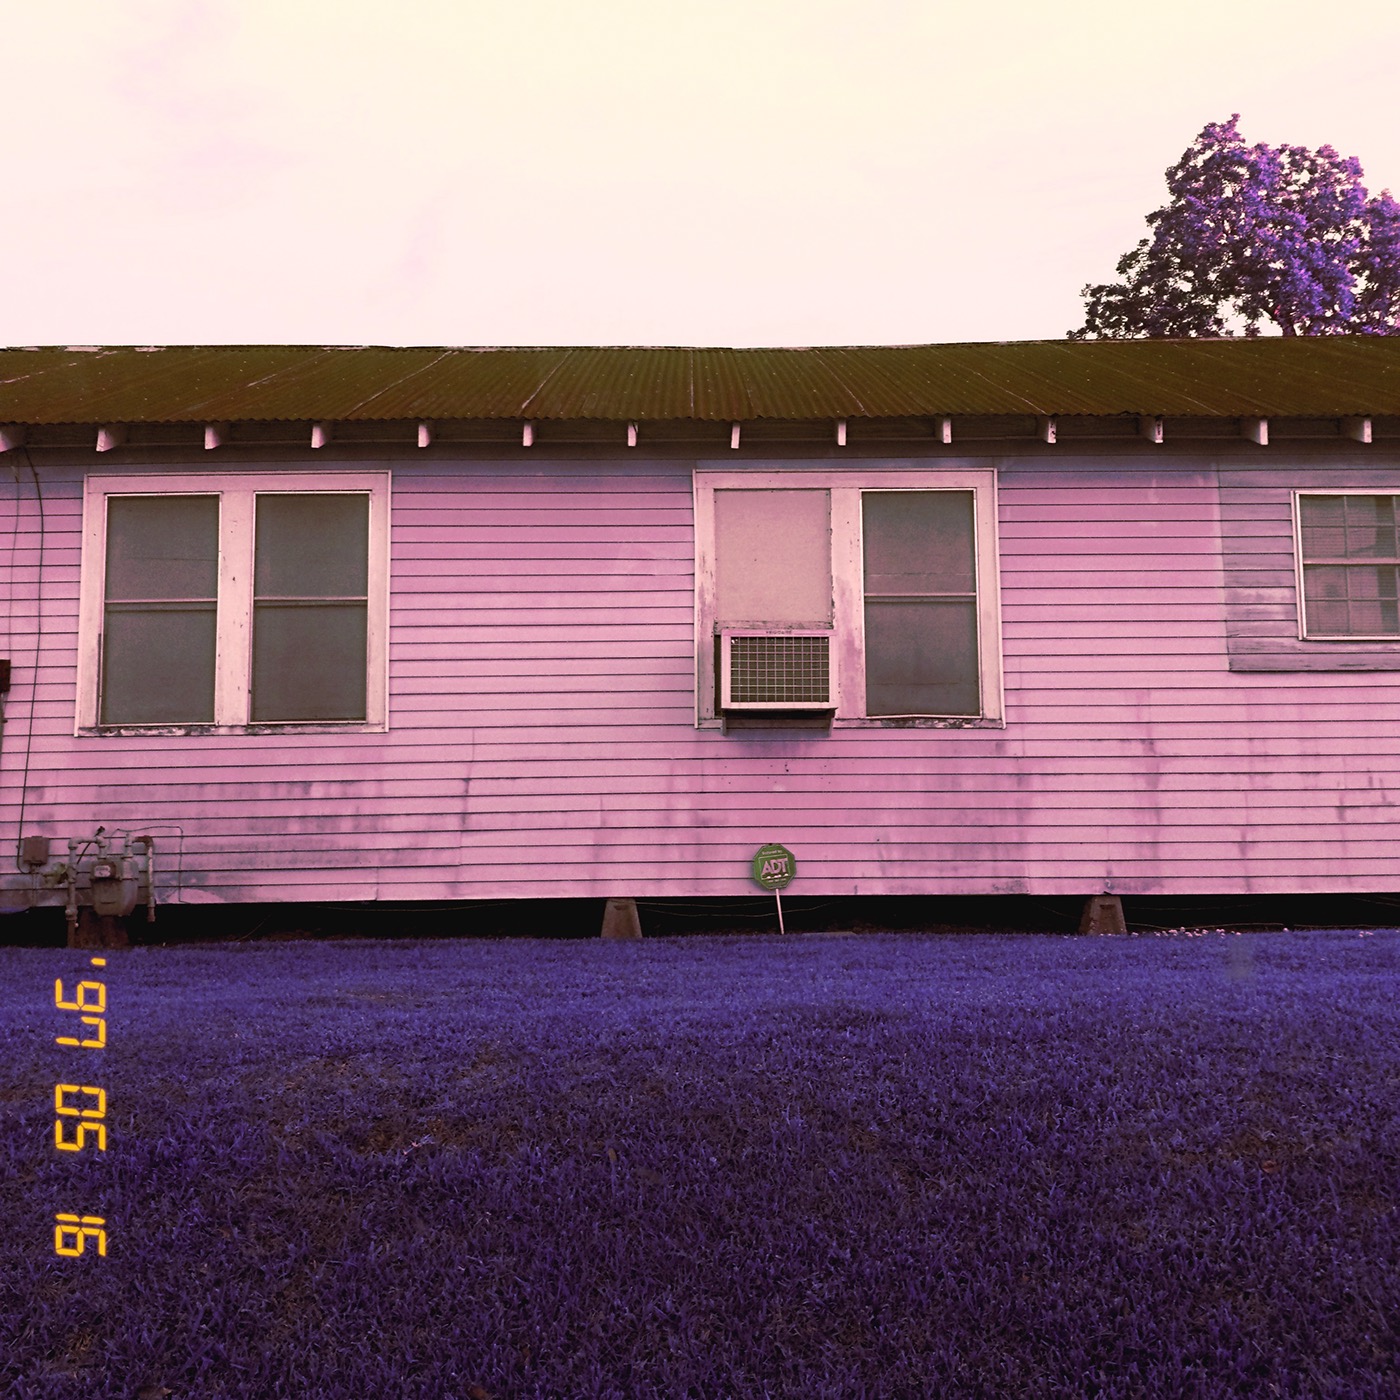 Acadiana cajun photo editing rural purple